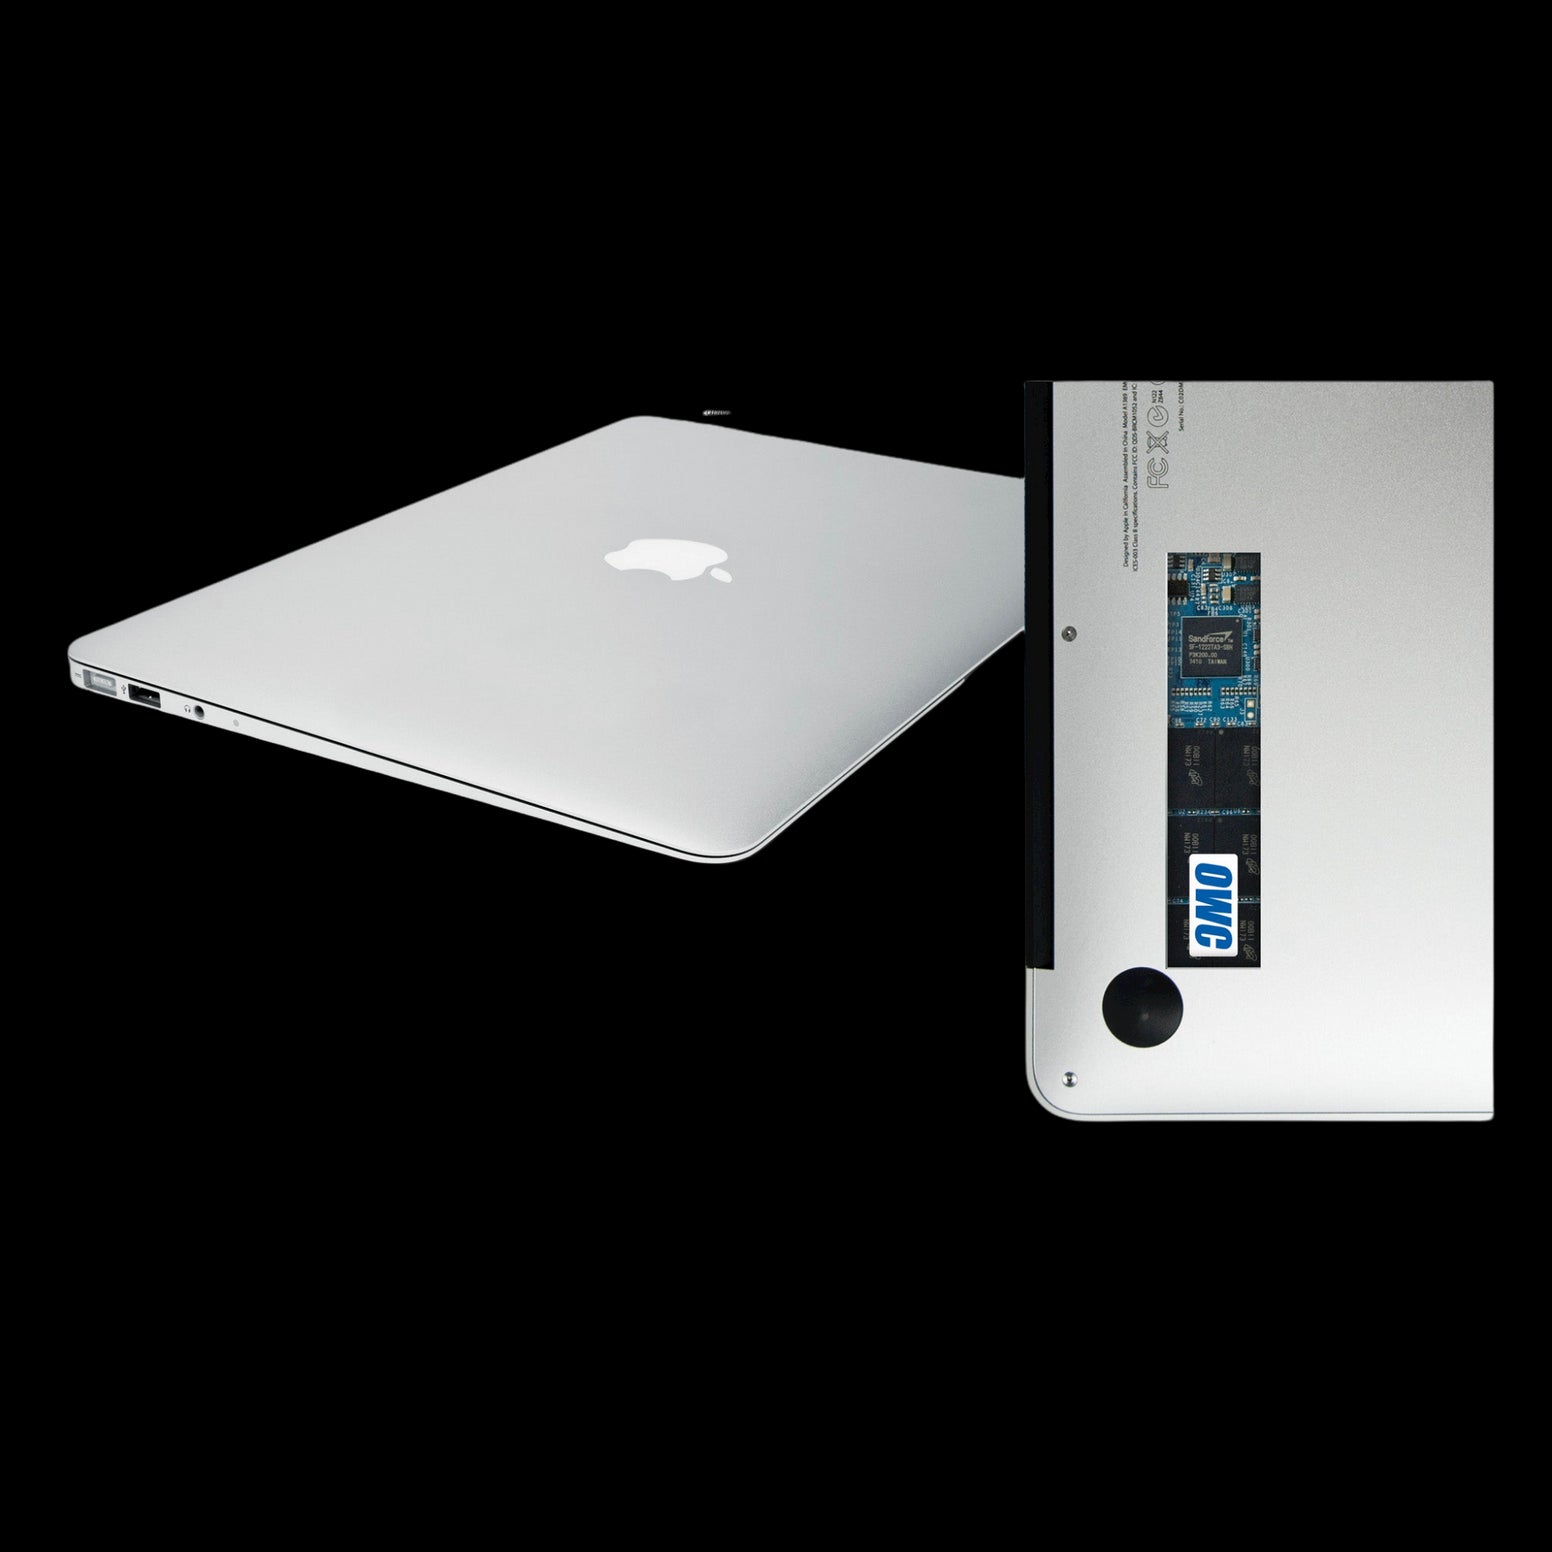 OWC 500GB Aura Pro 6G SSD for MacBook Air 2012